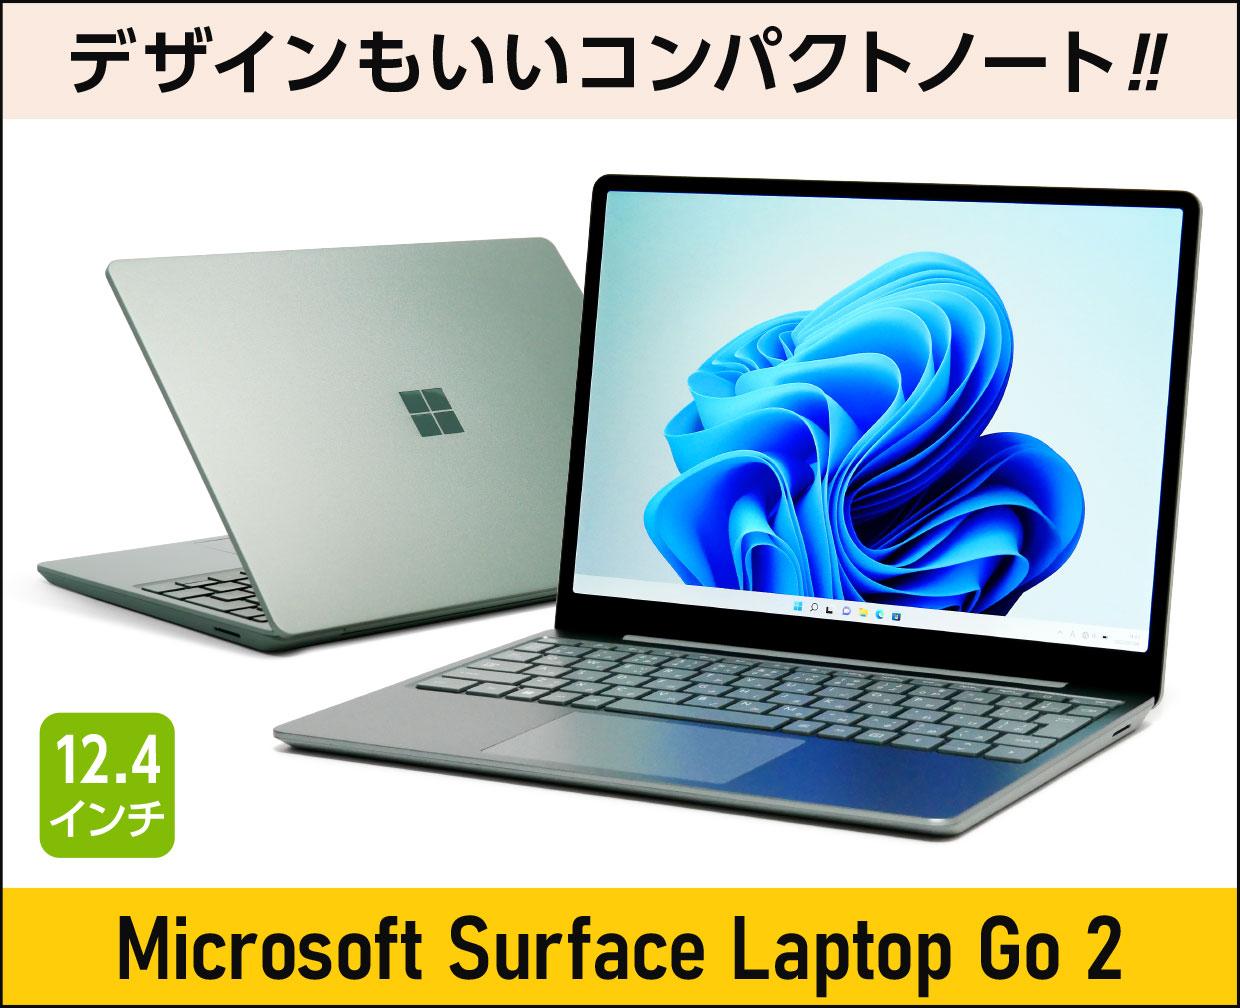 Surface Laptop 5 / Surface Laptop Go 2 U